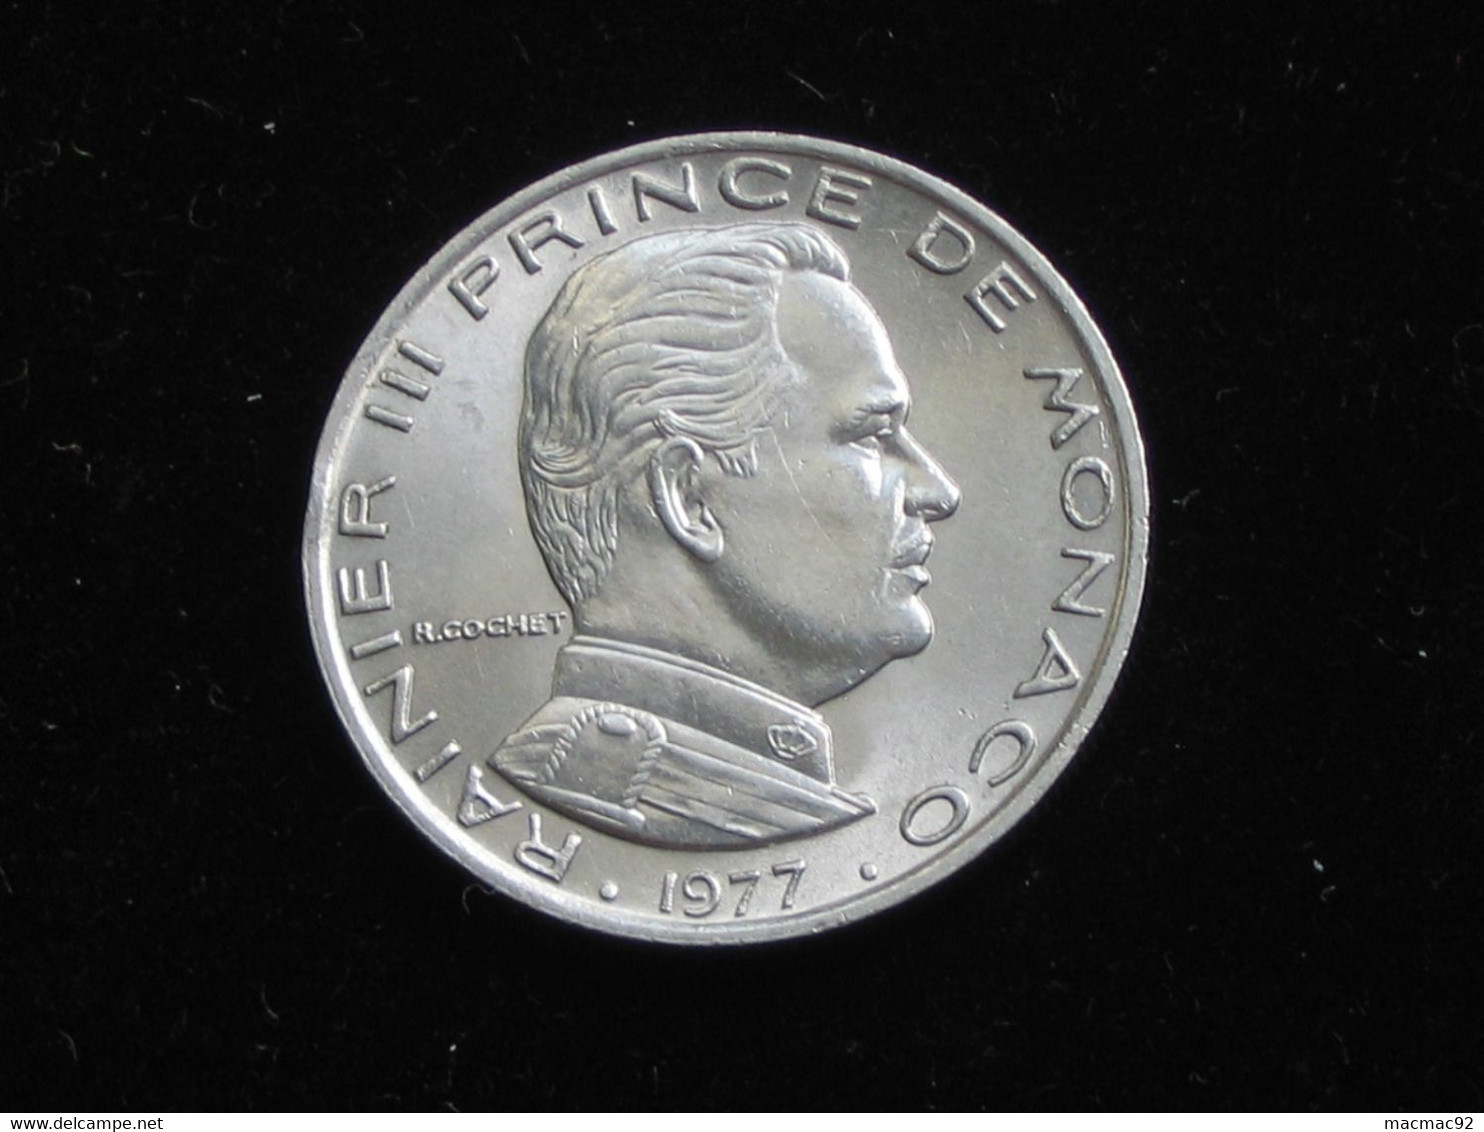 MONACO - 1 Franc 1977 - Rainier III Prince De Monaco **** EN ACHAT IMMEDIAT **** - 1949-1956 Alte Francs